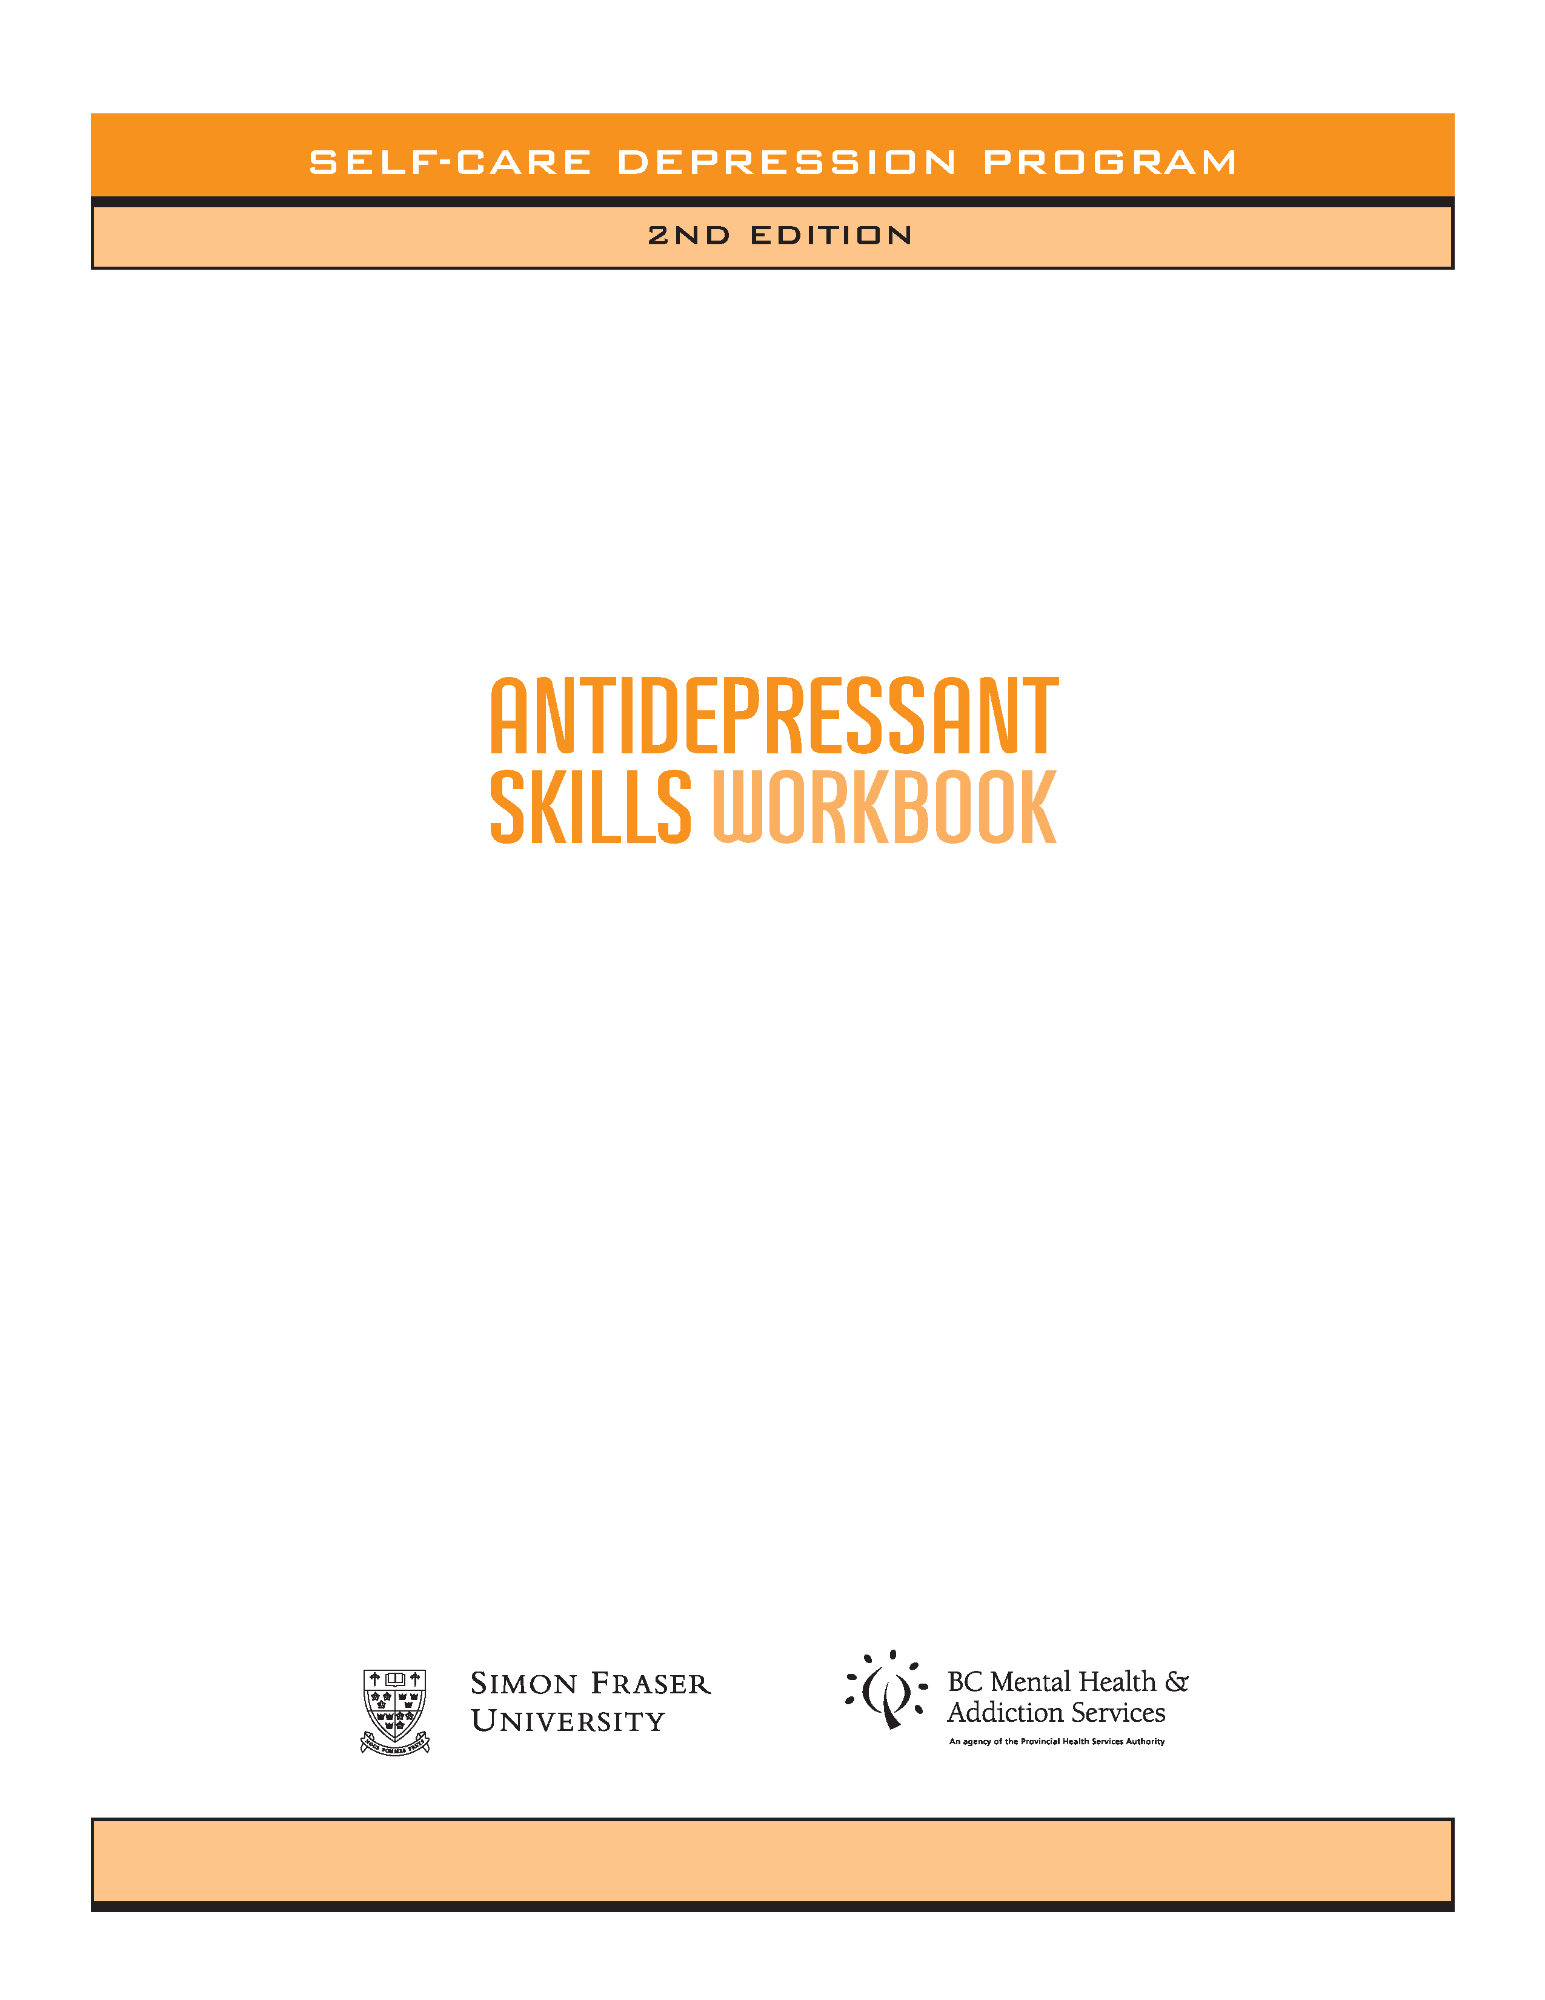 Antidepressant Skills Workbook